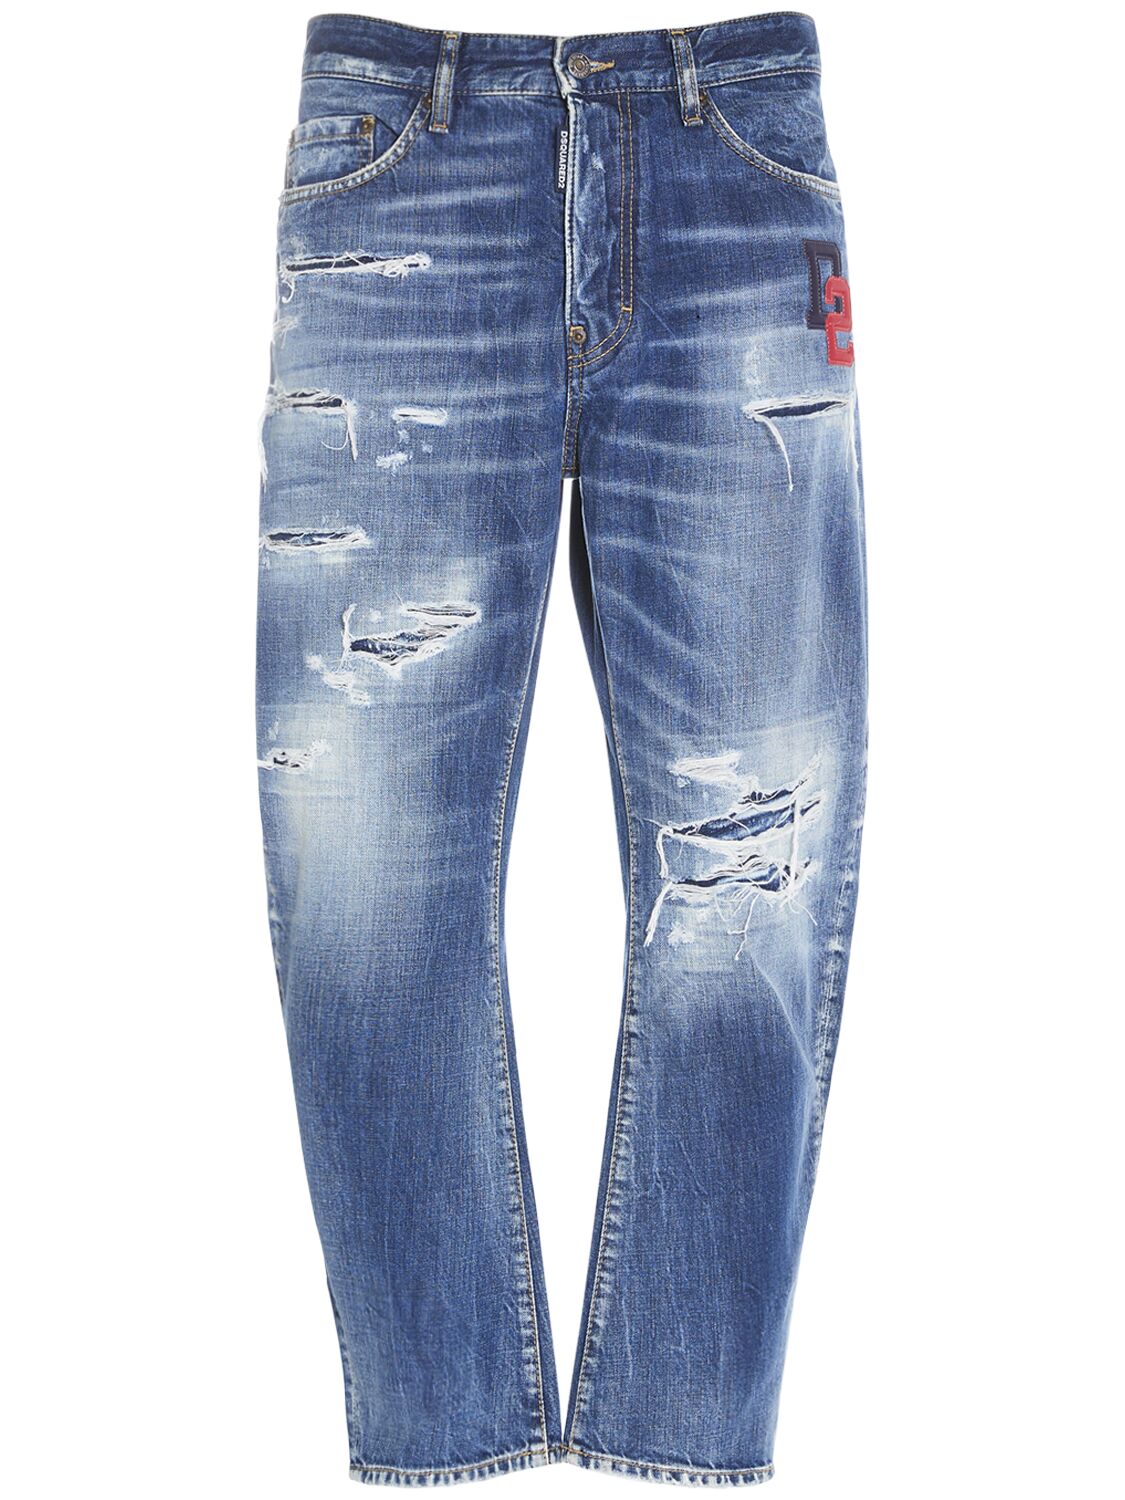 Image of Bro Cotton Denim Jeans